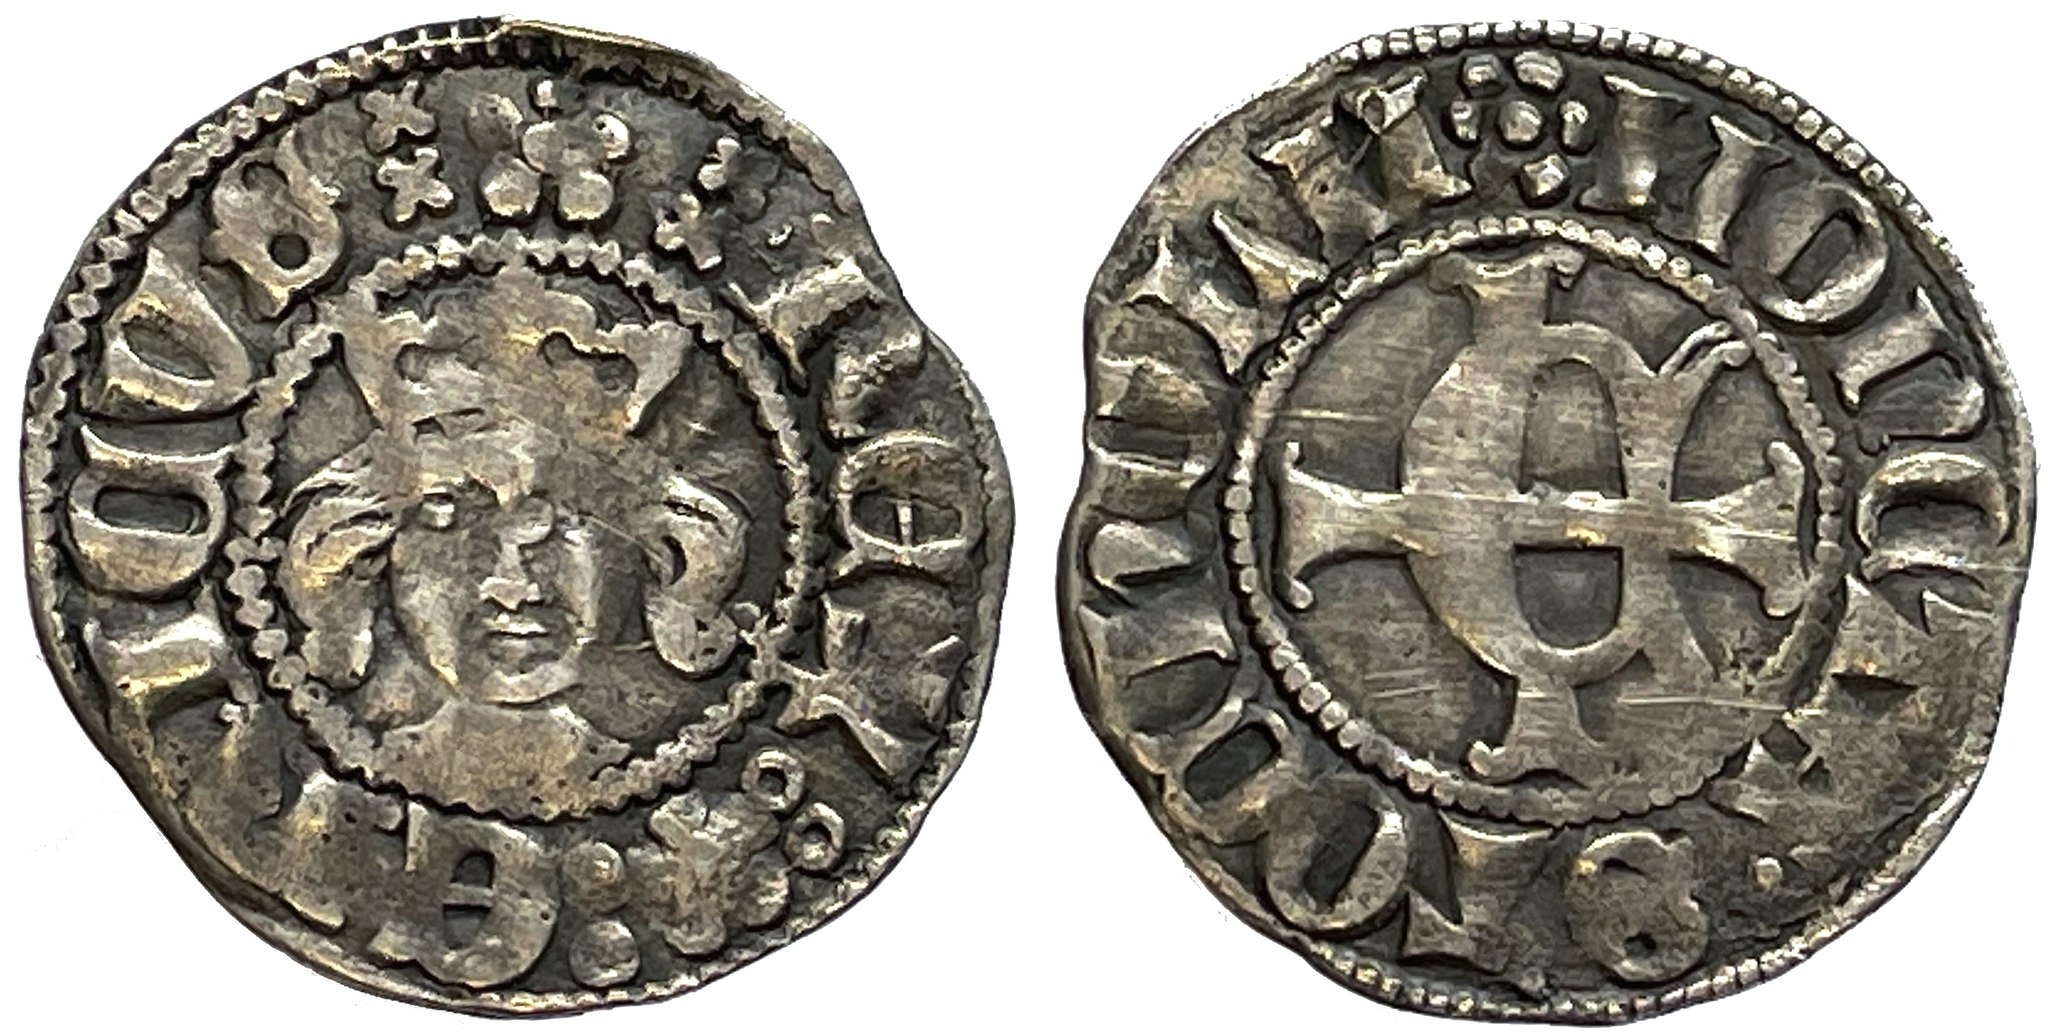 Erik av Pommern 1396-1439 - Stockholm - Örtug med ankarformade korsändar